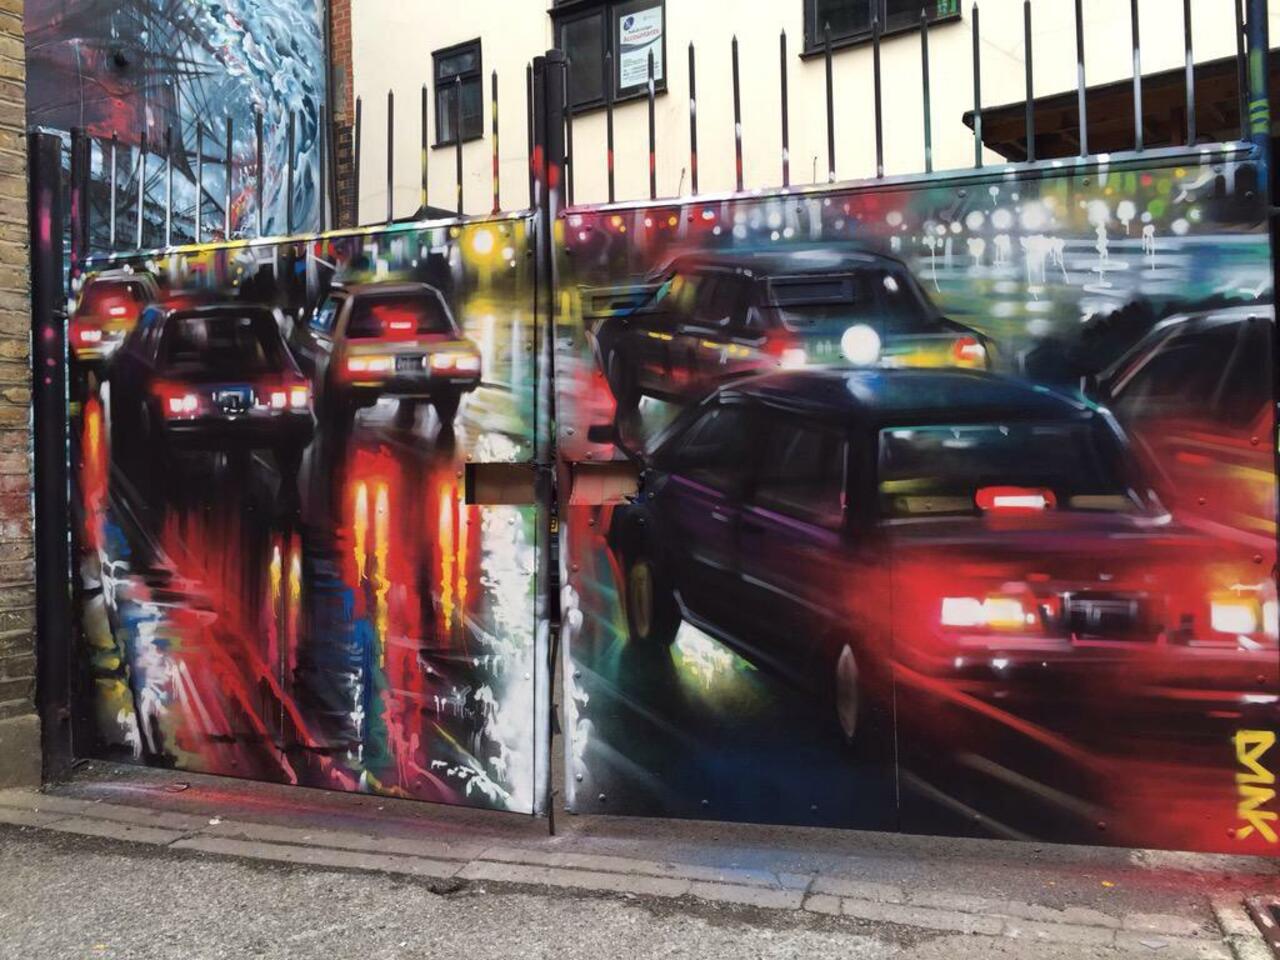 New Street Art by DanKitchener in Brick Lane London 

#art #graffiti #mural #streetart http://t.co/6MS95DSd5g